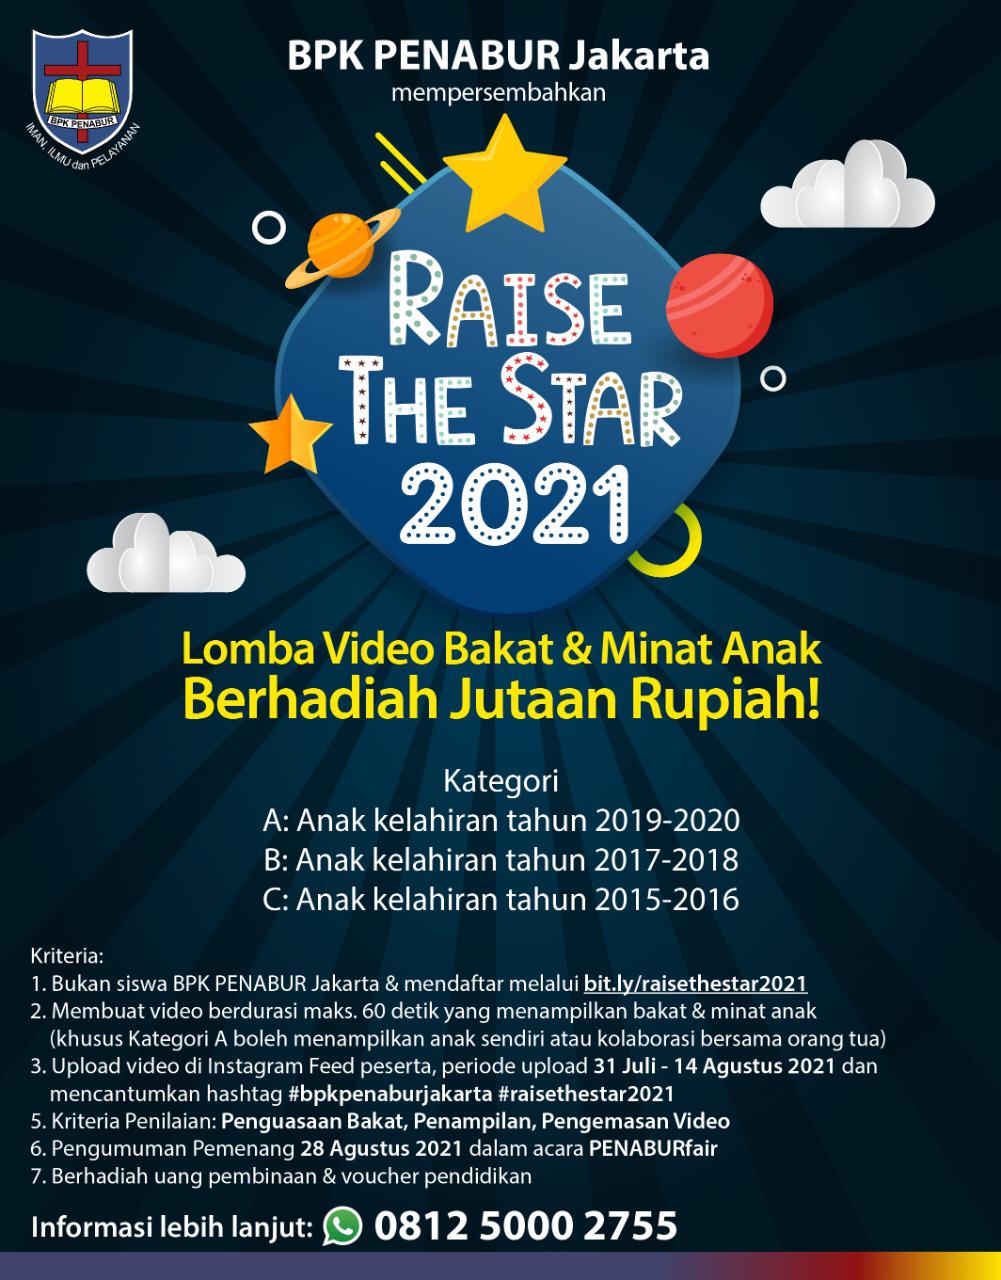 BPK PENABUR Jakarta : Raise the Star 2021